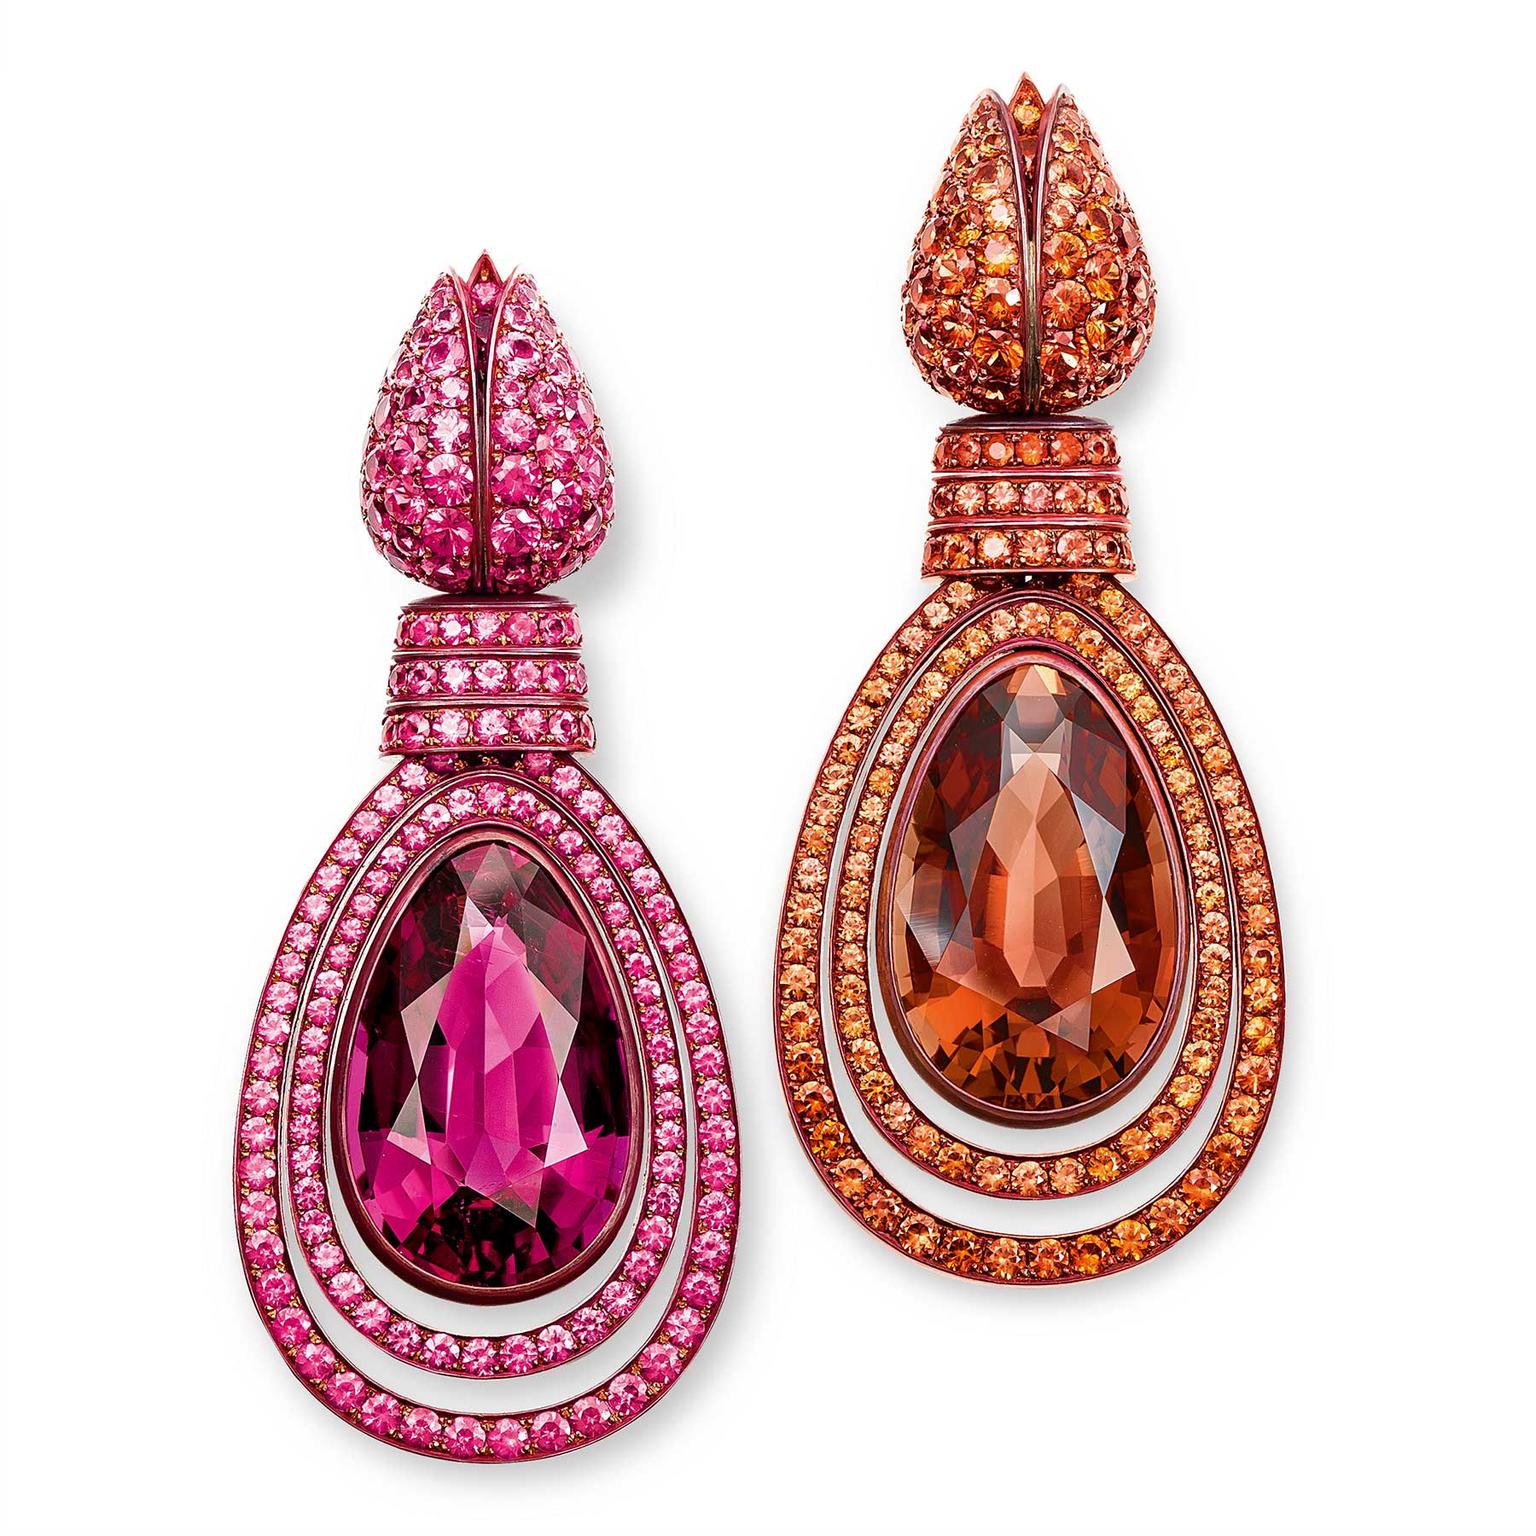 Hemmerle tourmaline and rubellite earrings